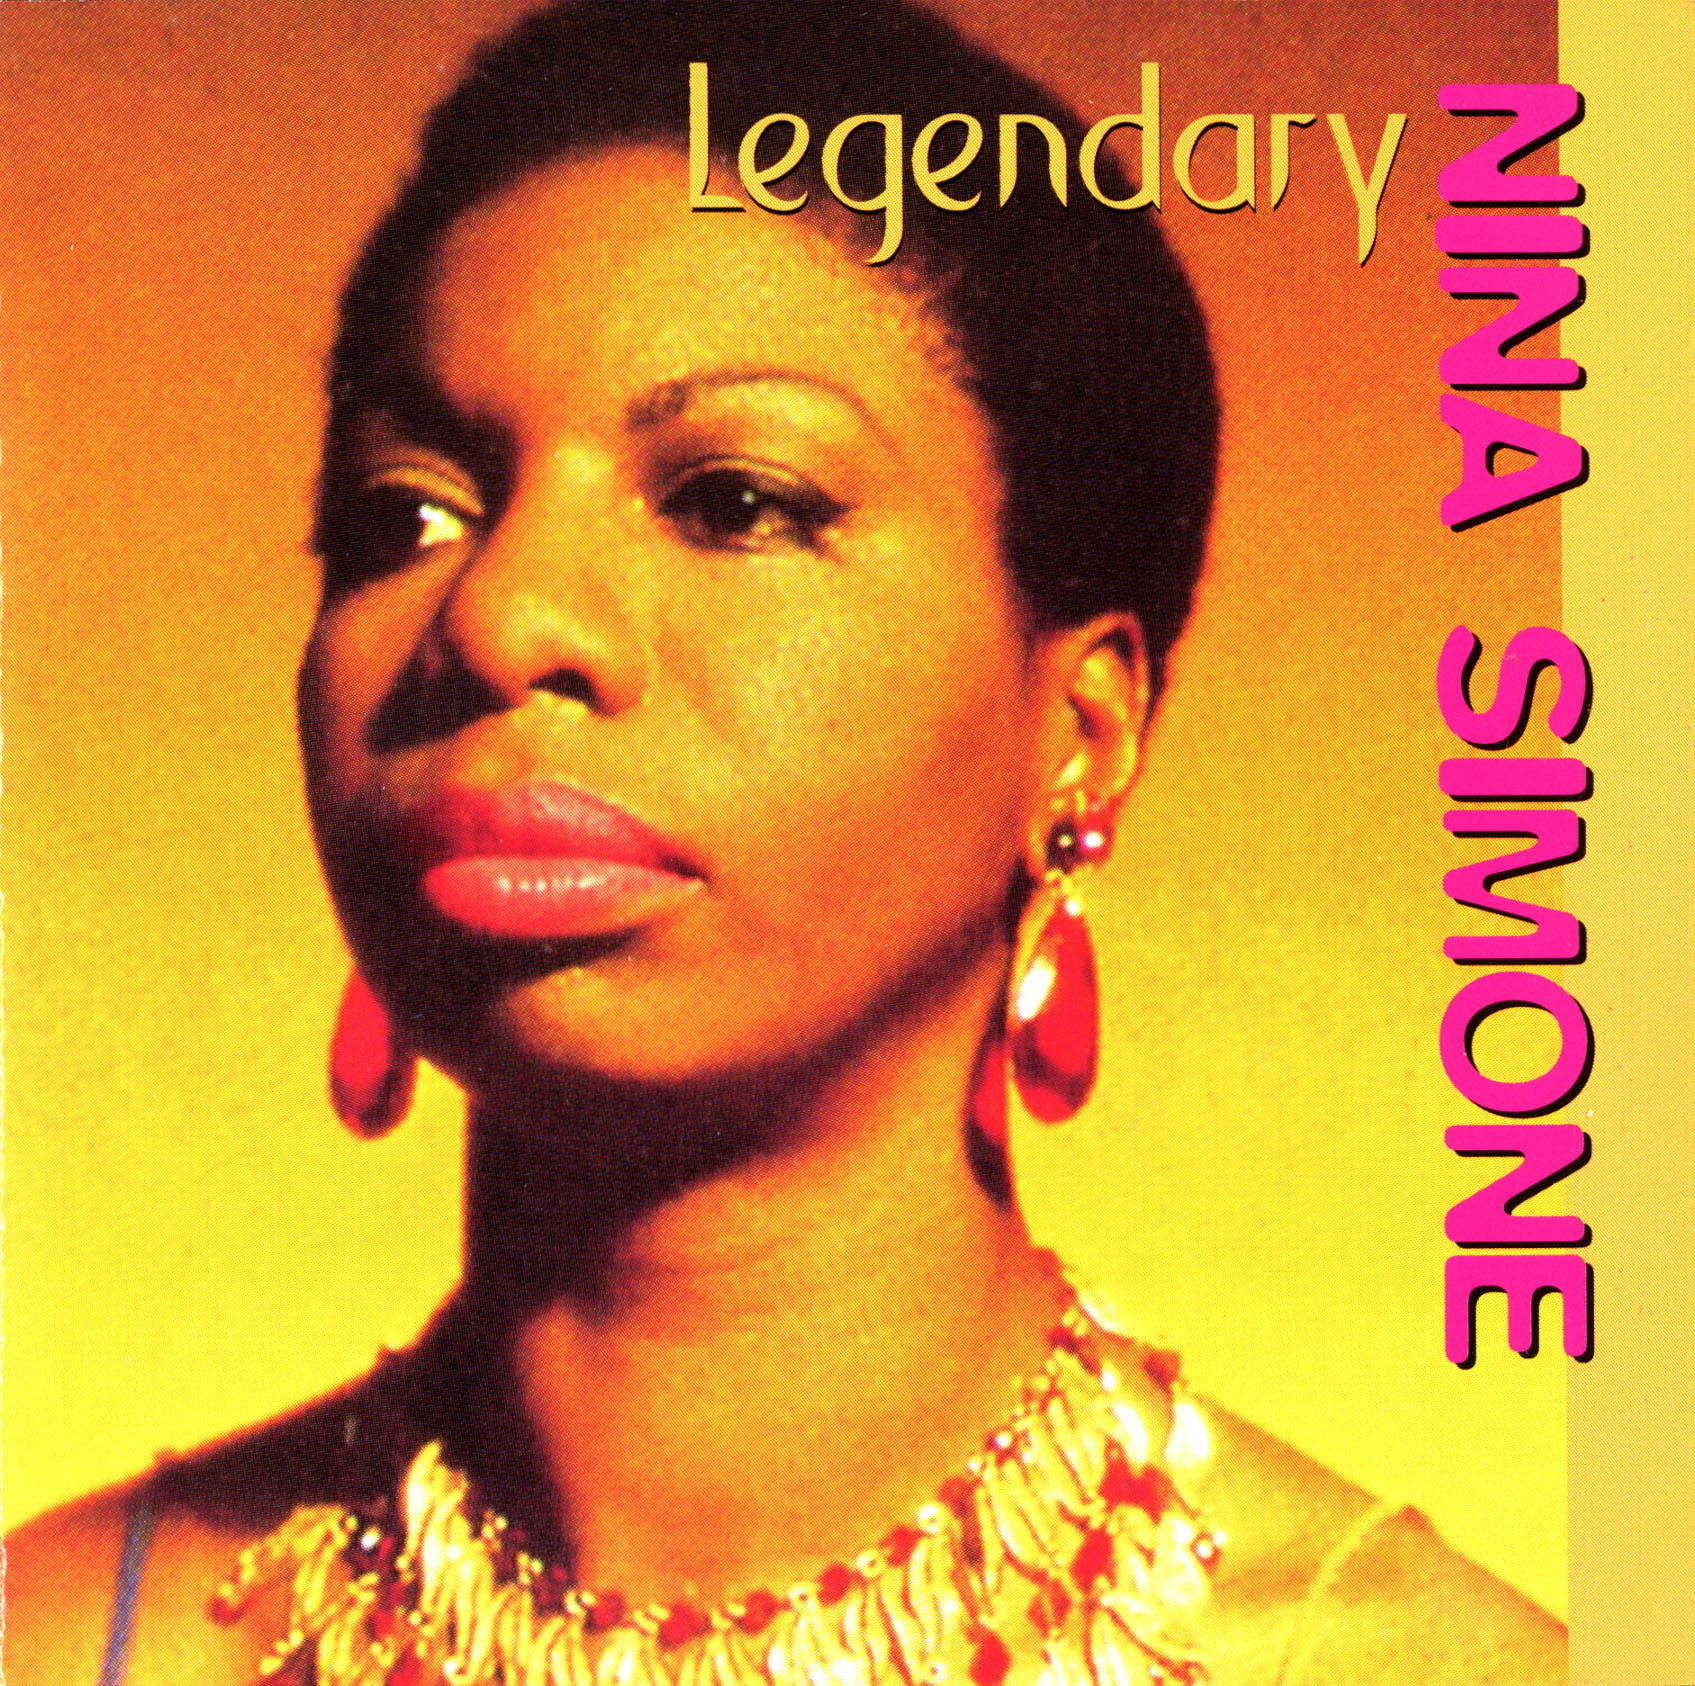 The Essential Nina Simone Album Cover Wallpaper